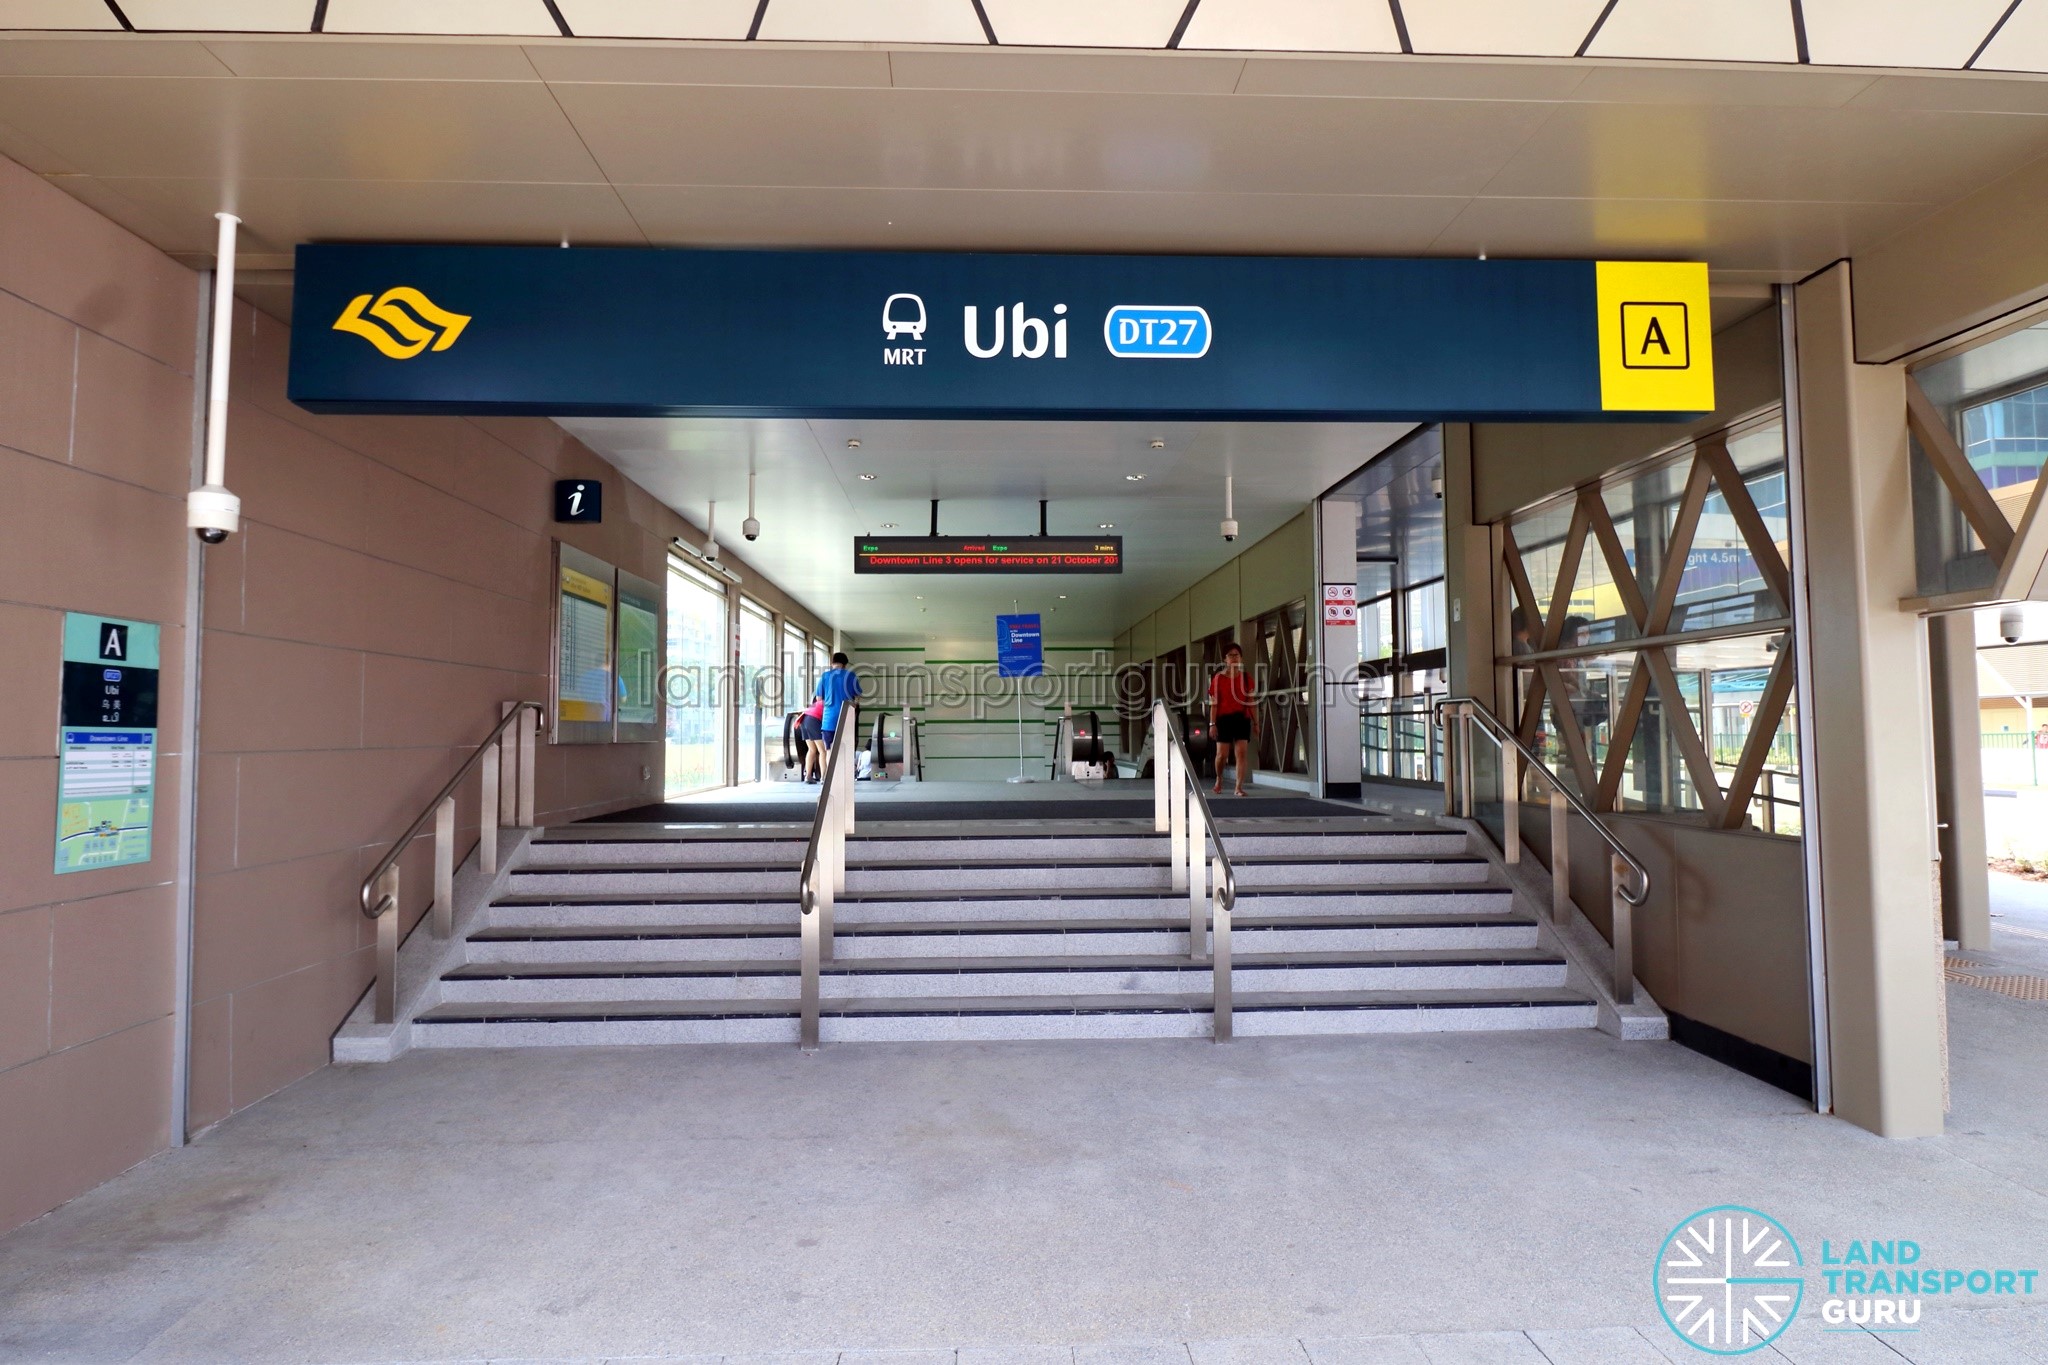 Ubi MRT Station Exit A